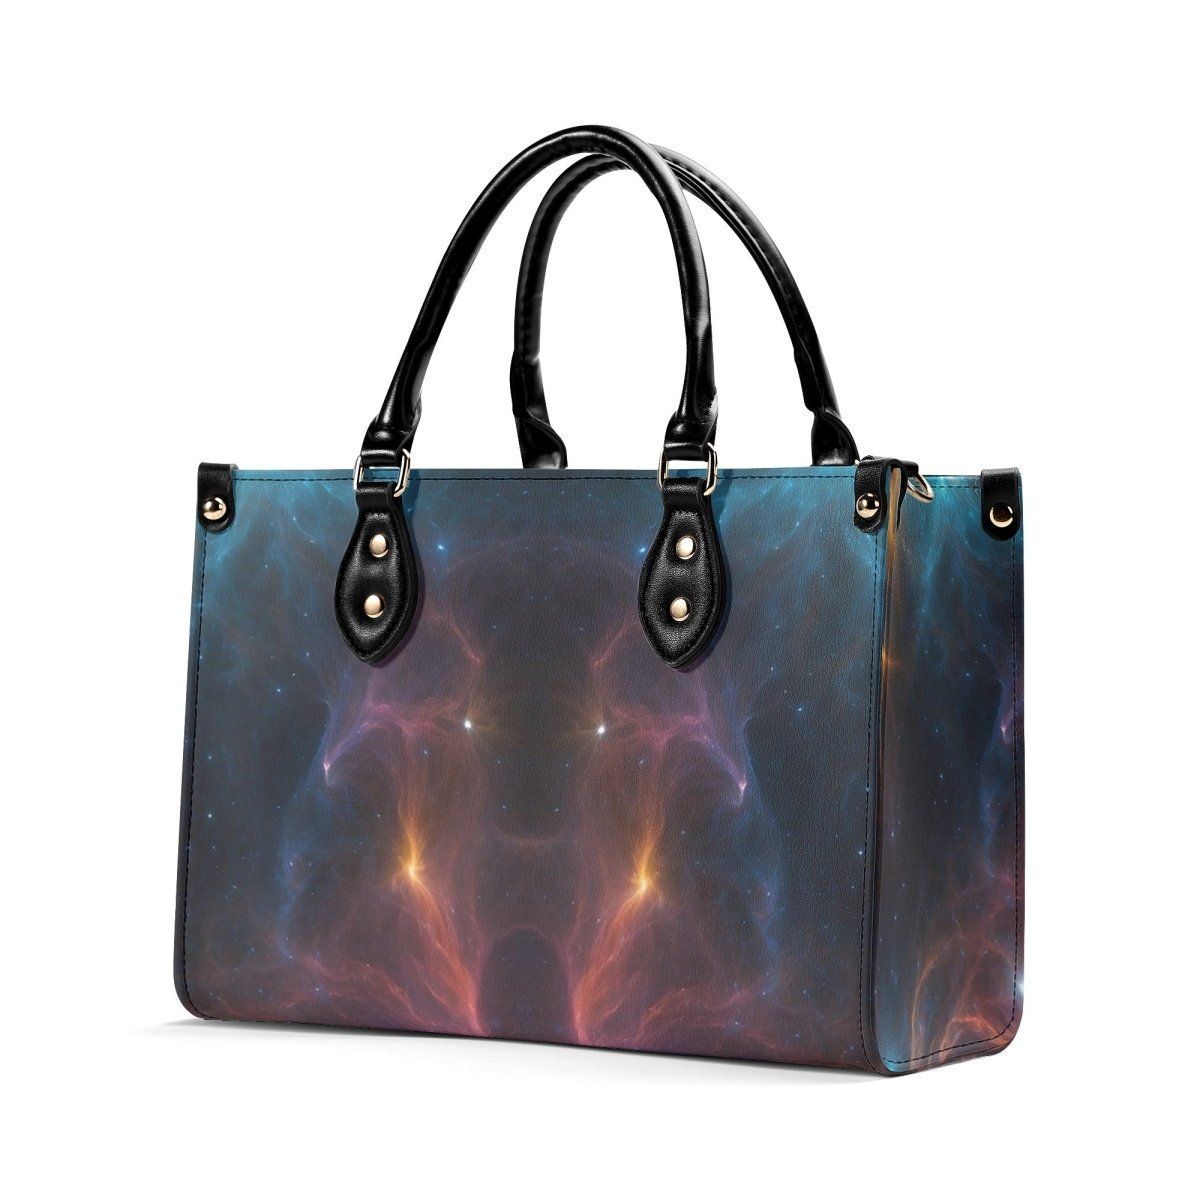 Celestial Print Leather Handbag - Iron Phoenix GHG